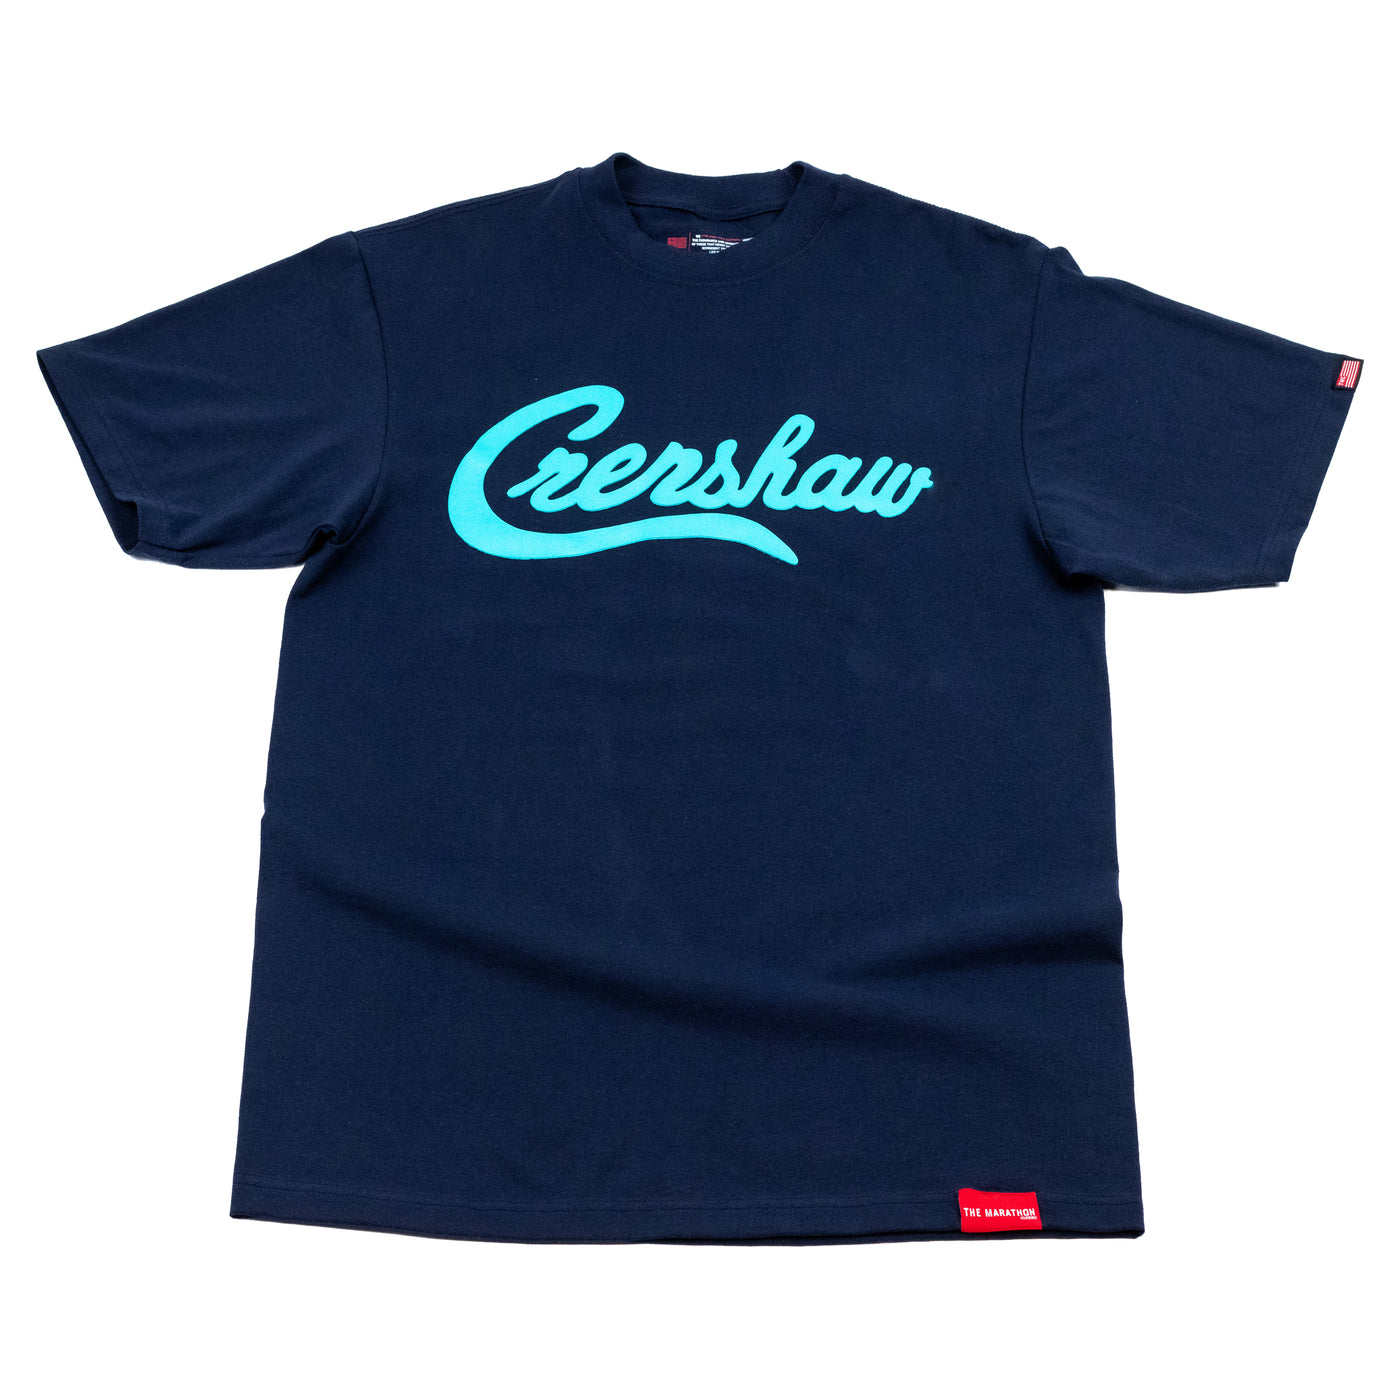 Crenshaw T-Shirt - Navy/Teal - Front